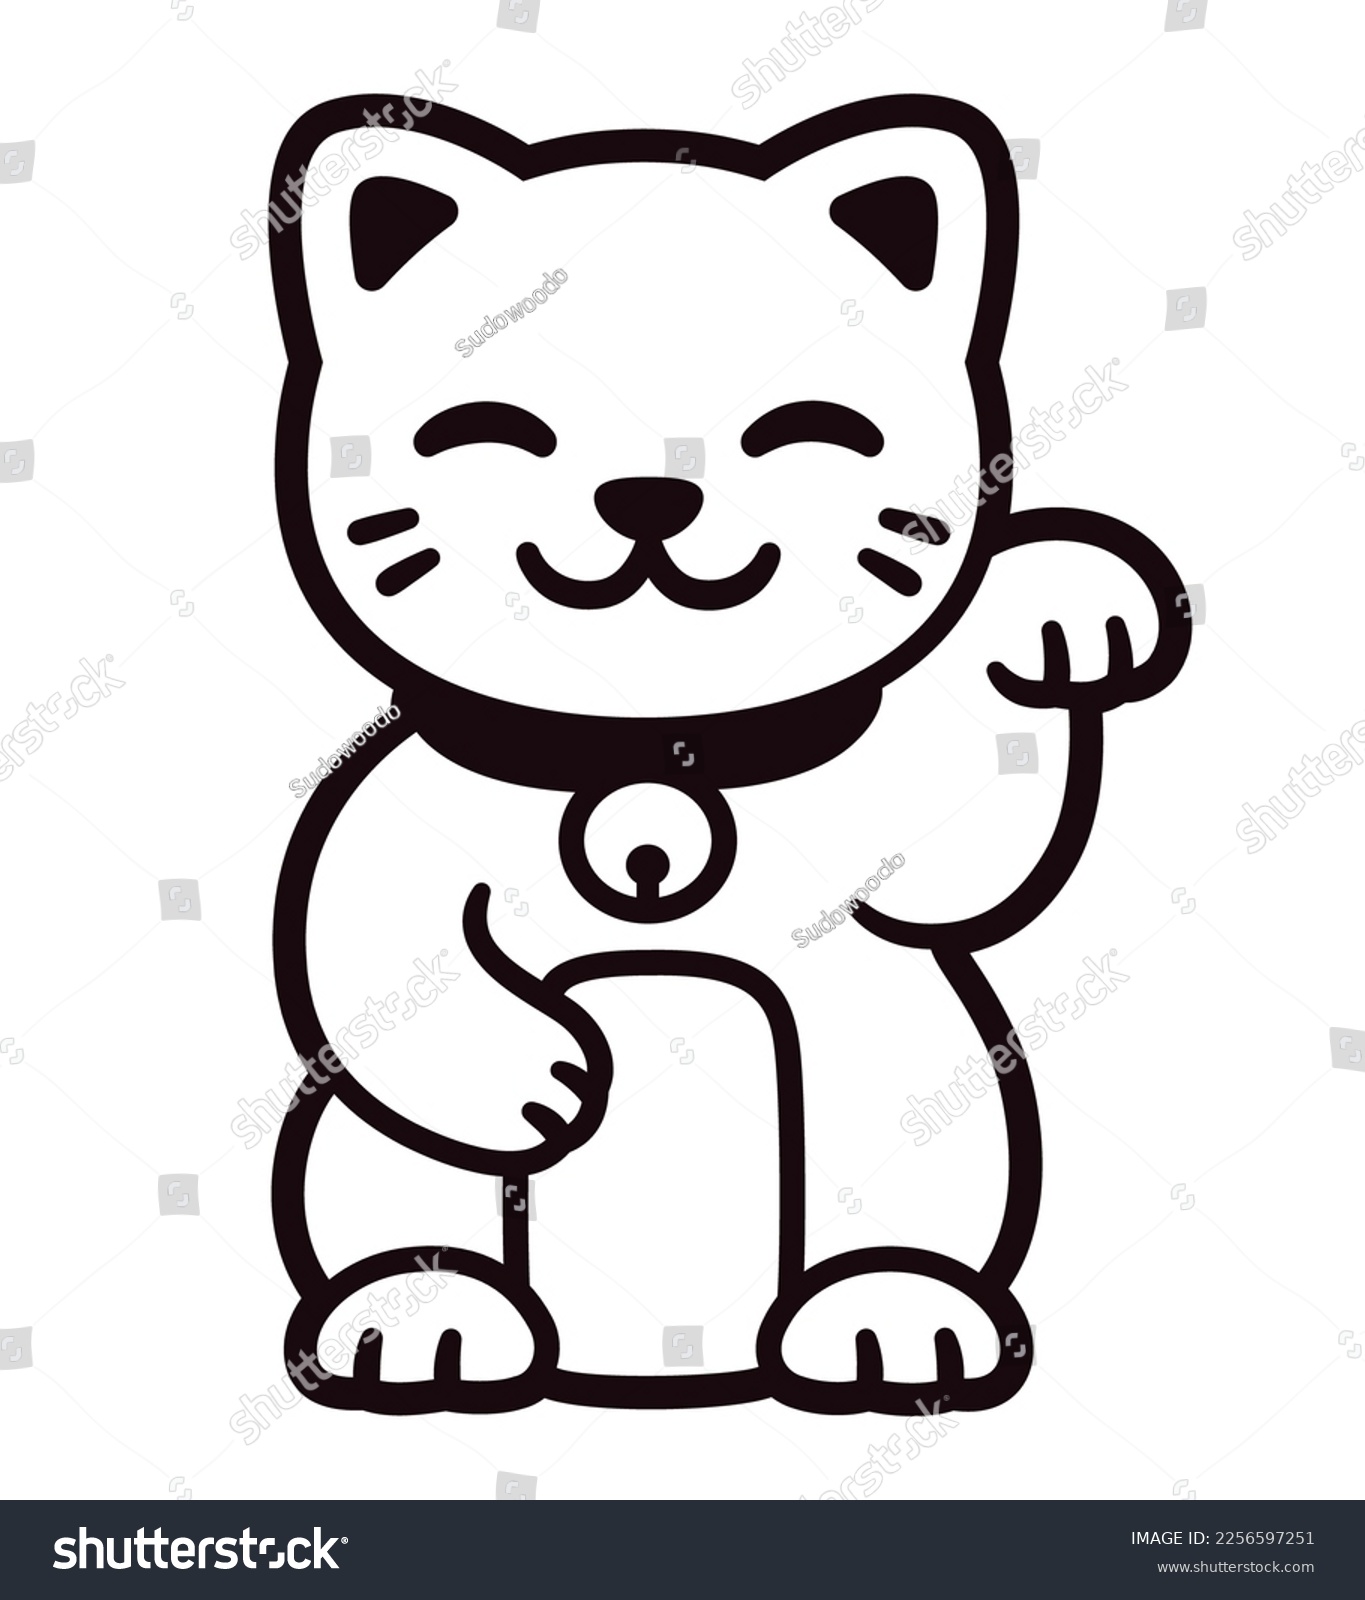 SVG of Cute cartoon Maneki Neko, Japanese lucky cat. Black and white logo or icon. Vector line art illustration. svg